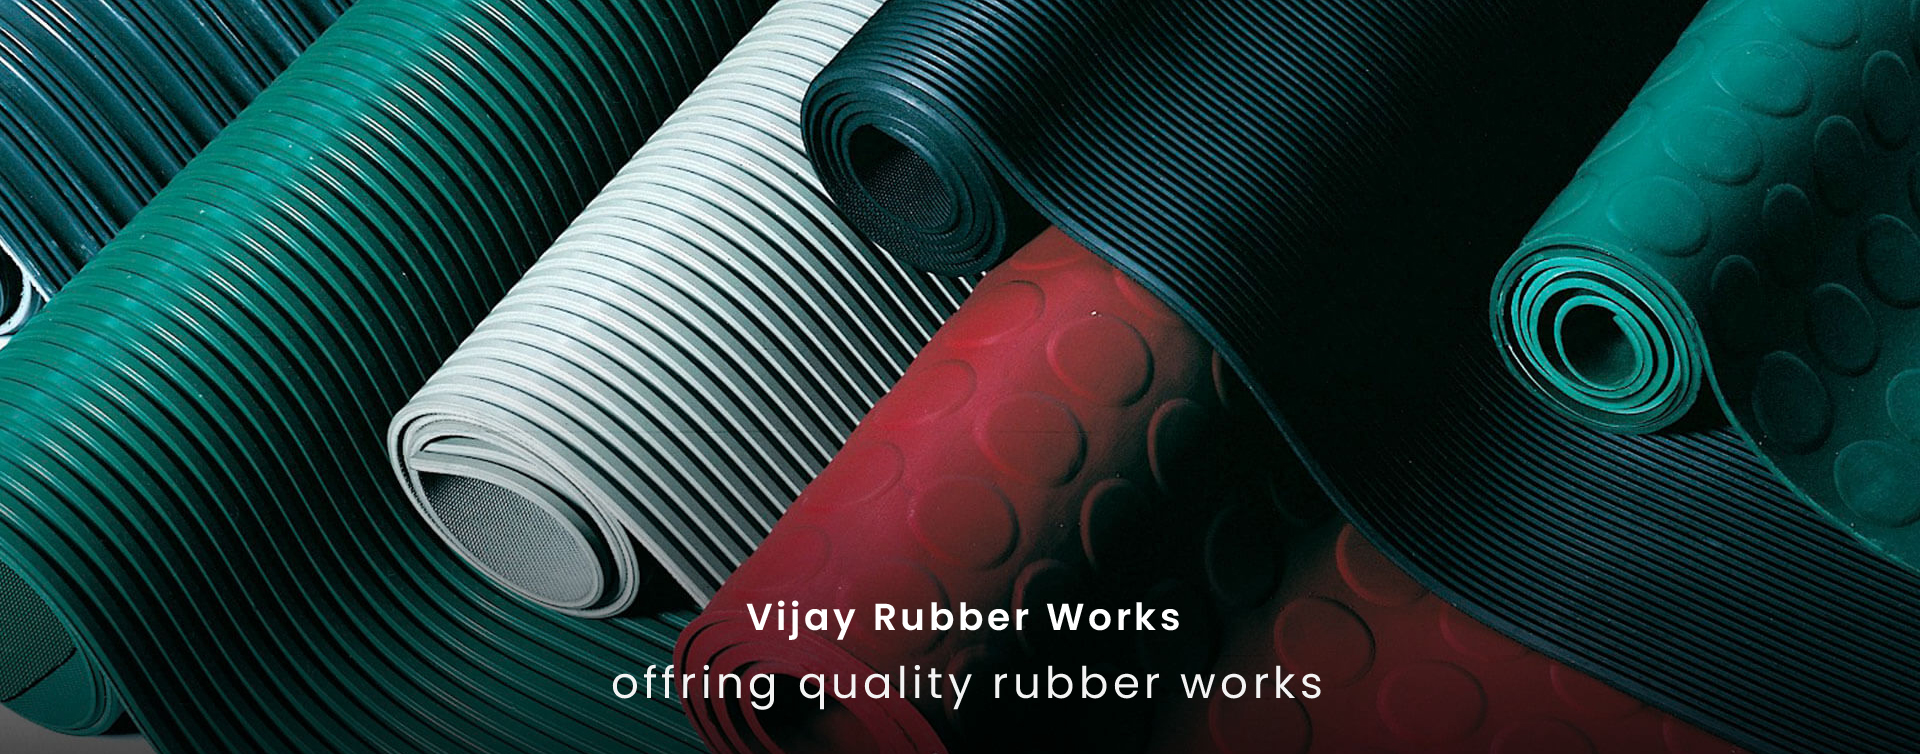 Vijay Rubber Works